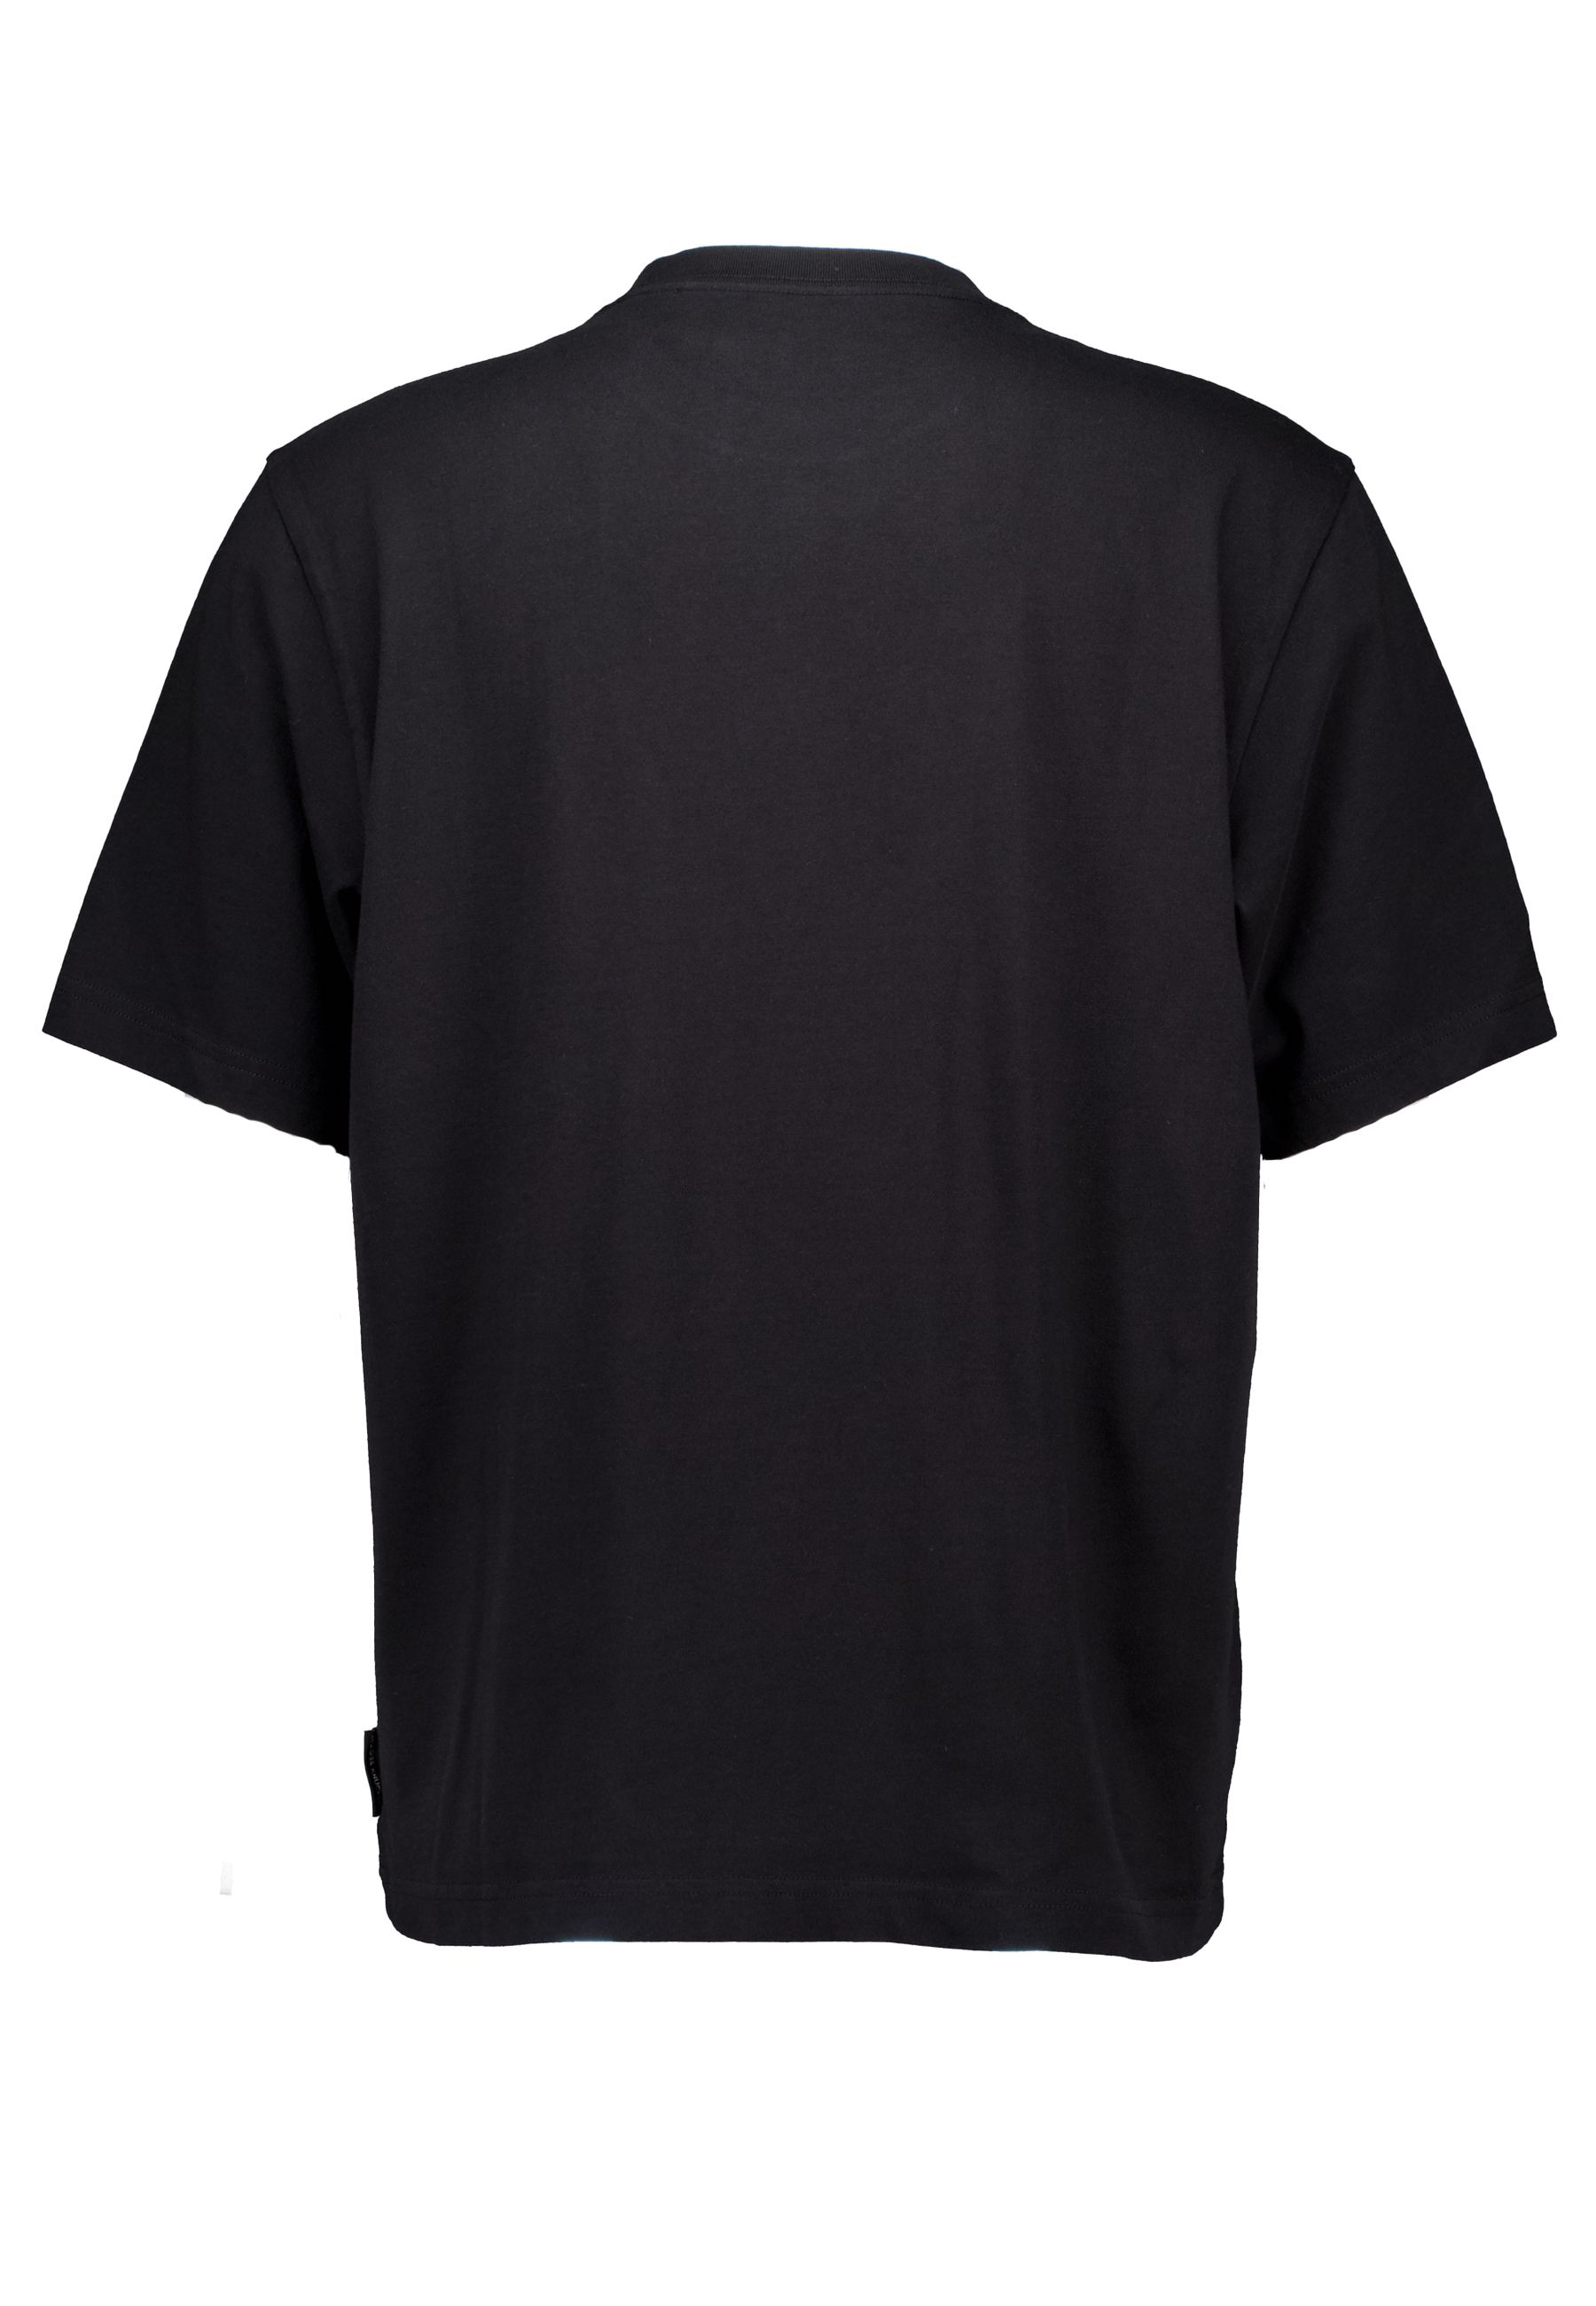 Henri T-shirts Zwart M14mt720